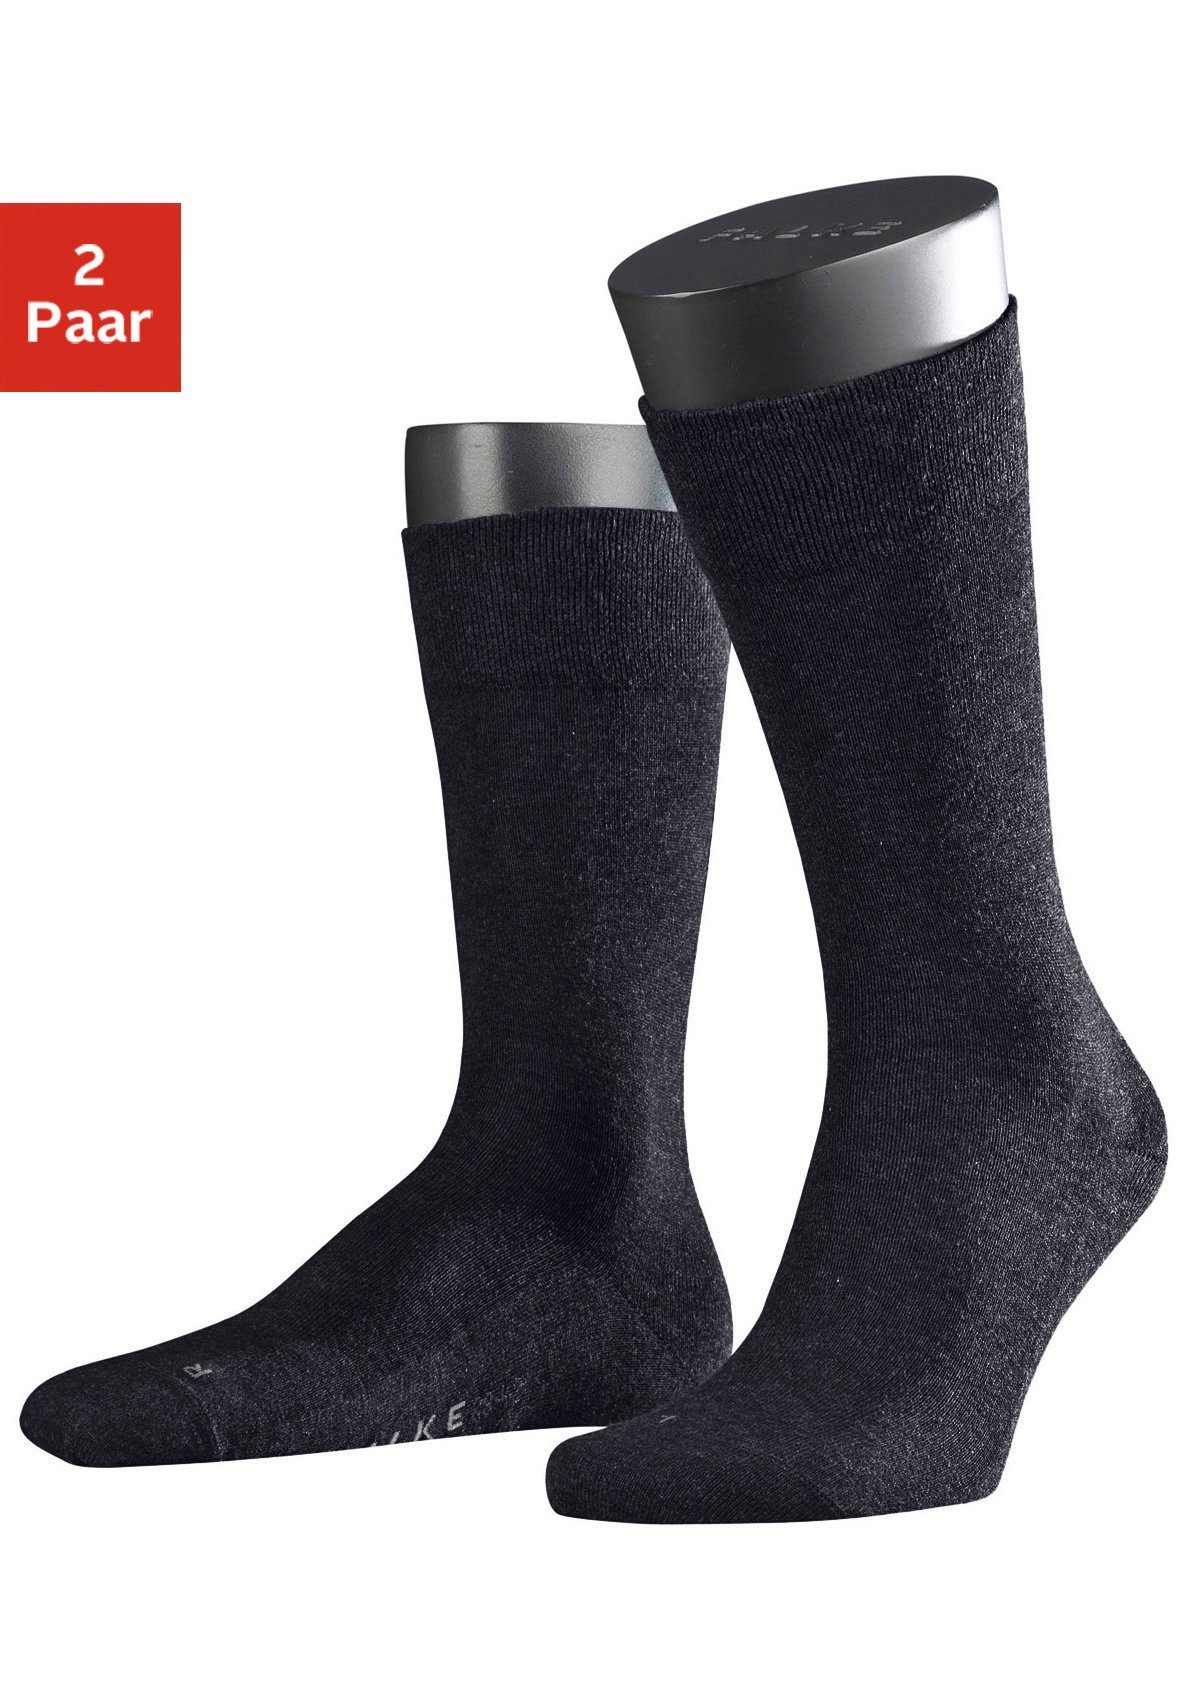 Gummi sensitve (2-Paar) mit Socken FALKE London ohne schwarz Sensitive Bündchen